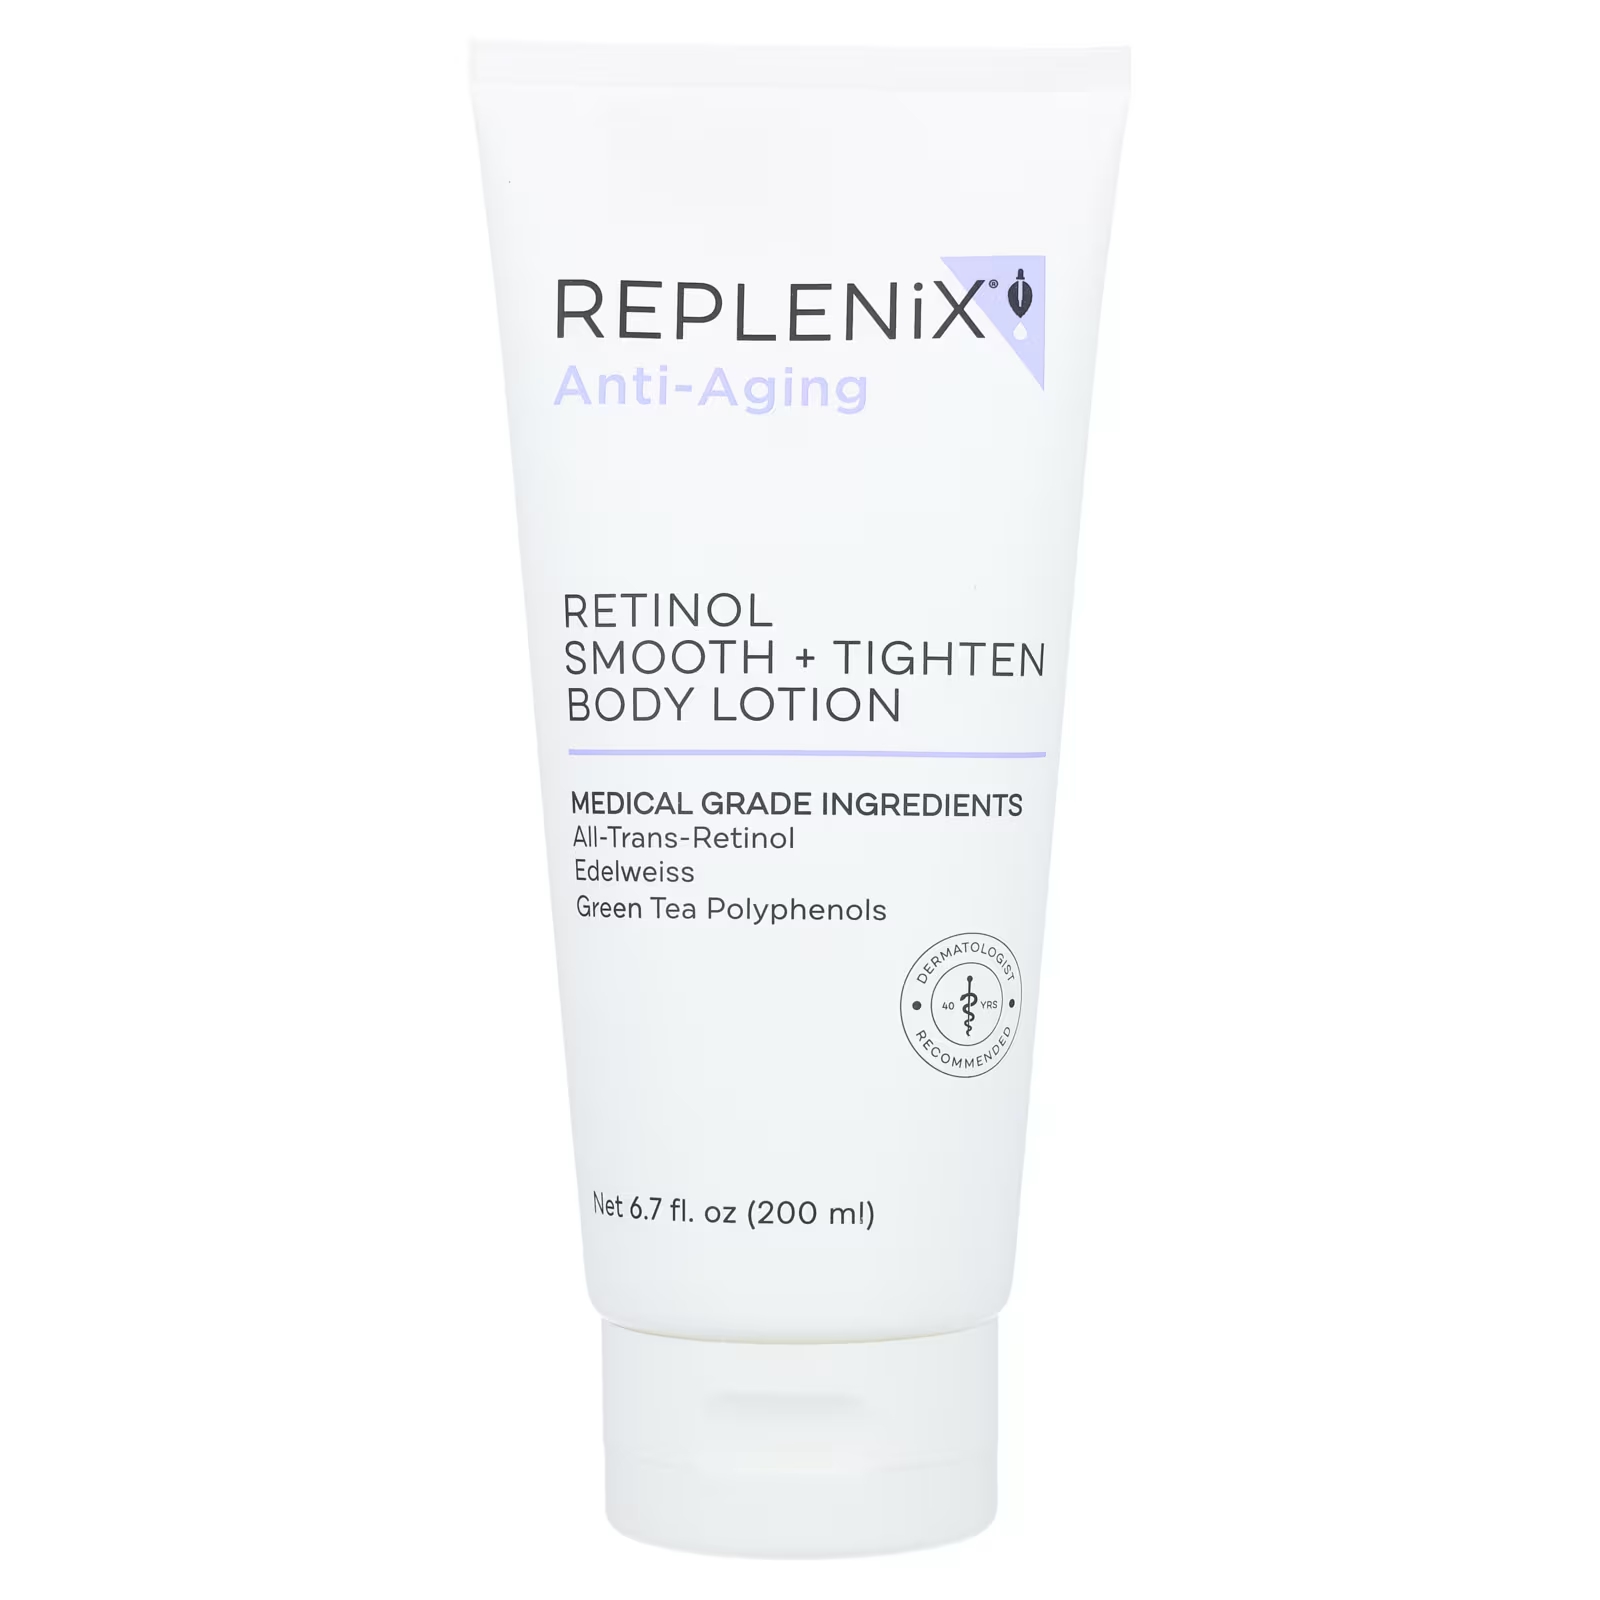 Replenix Anti-Aging Retinol Smooth + Tighten лосьон для тела, 6,7 жидких унций (200 мл)